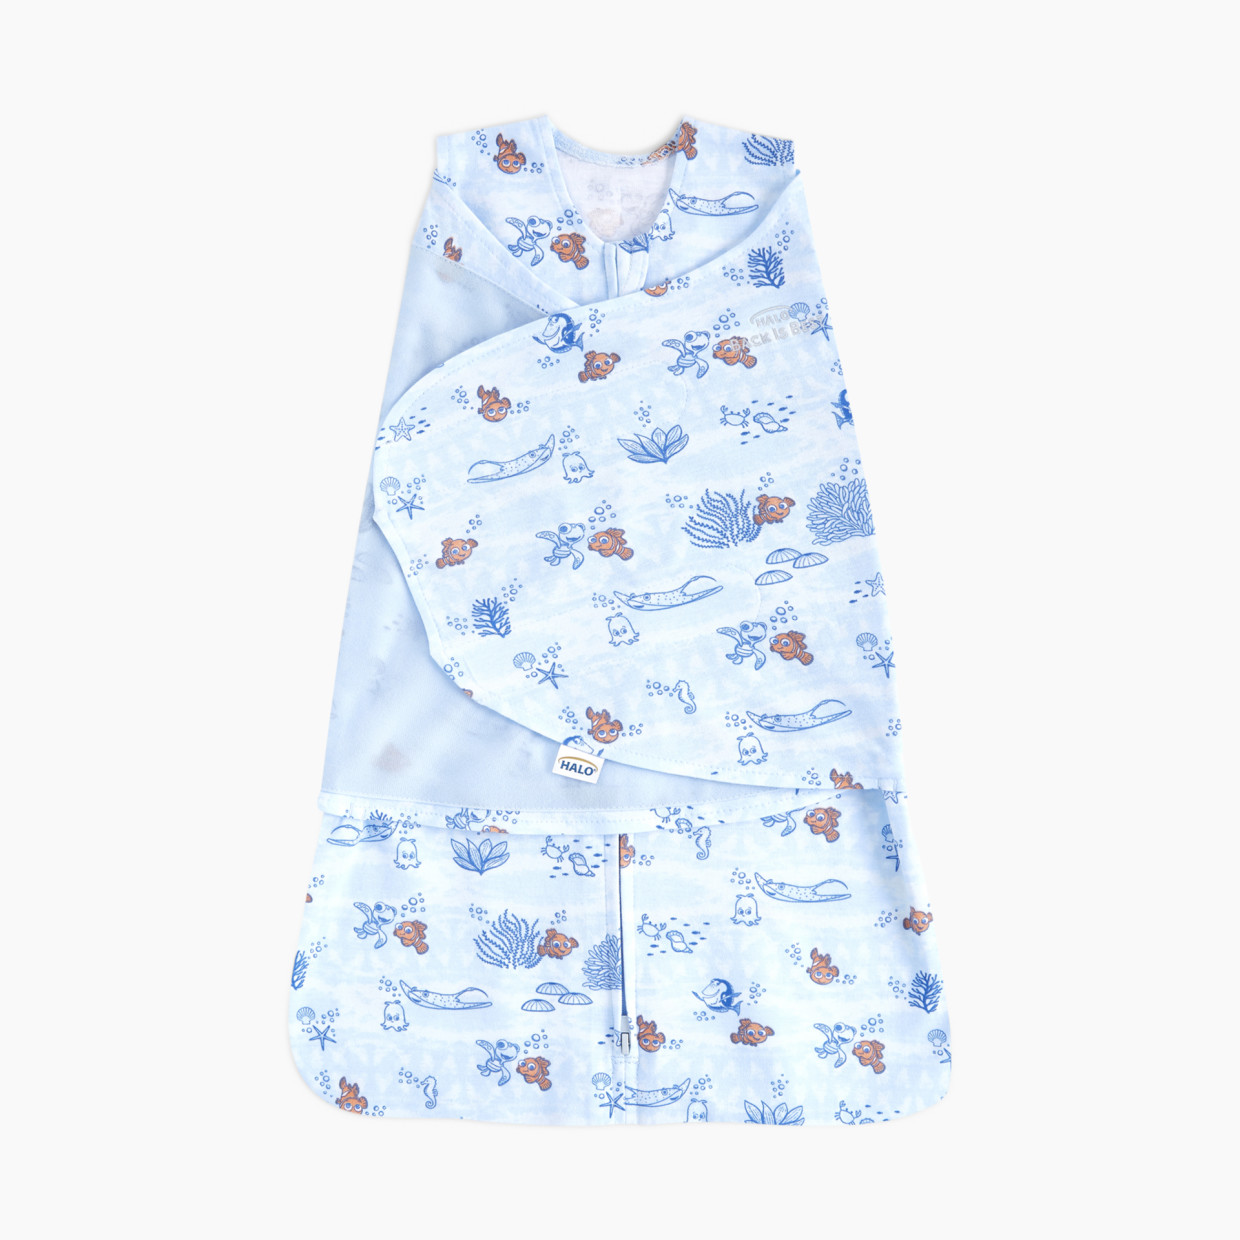 Halo Disney SleepSack Swaddle Cotton - Nemo Tie Dye, Small.